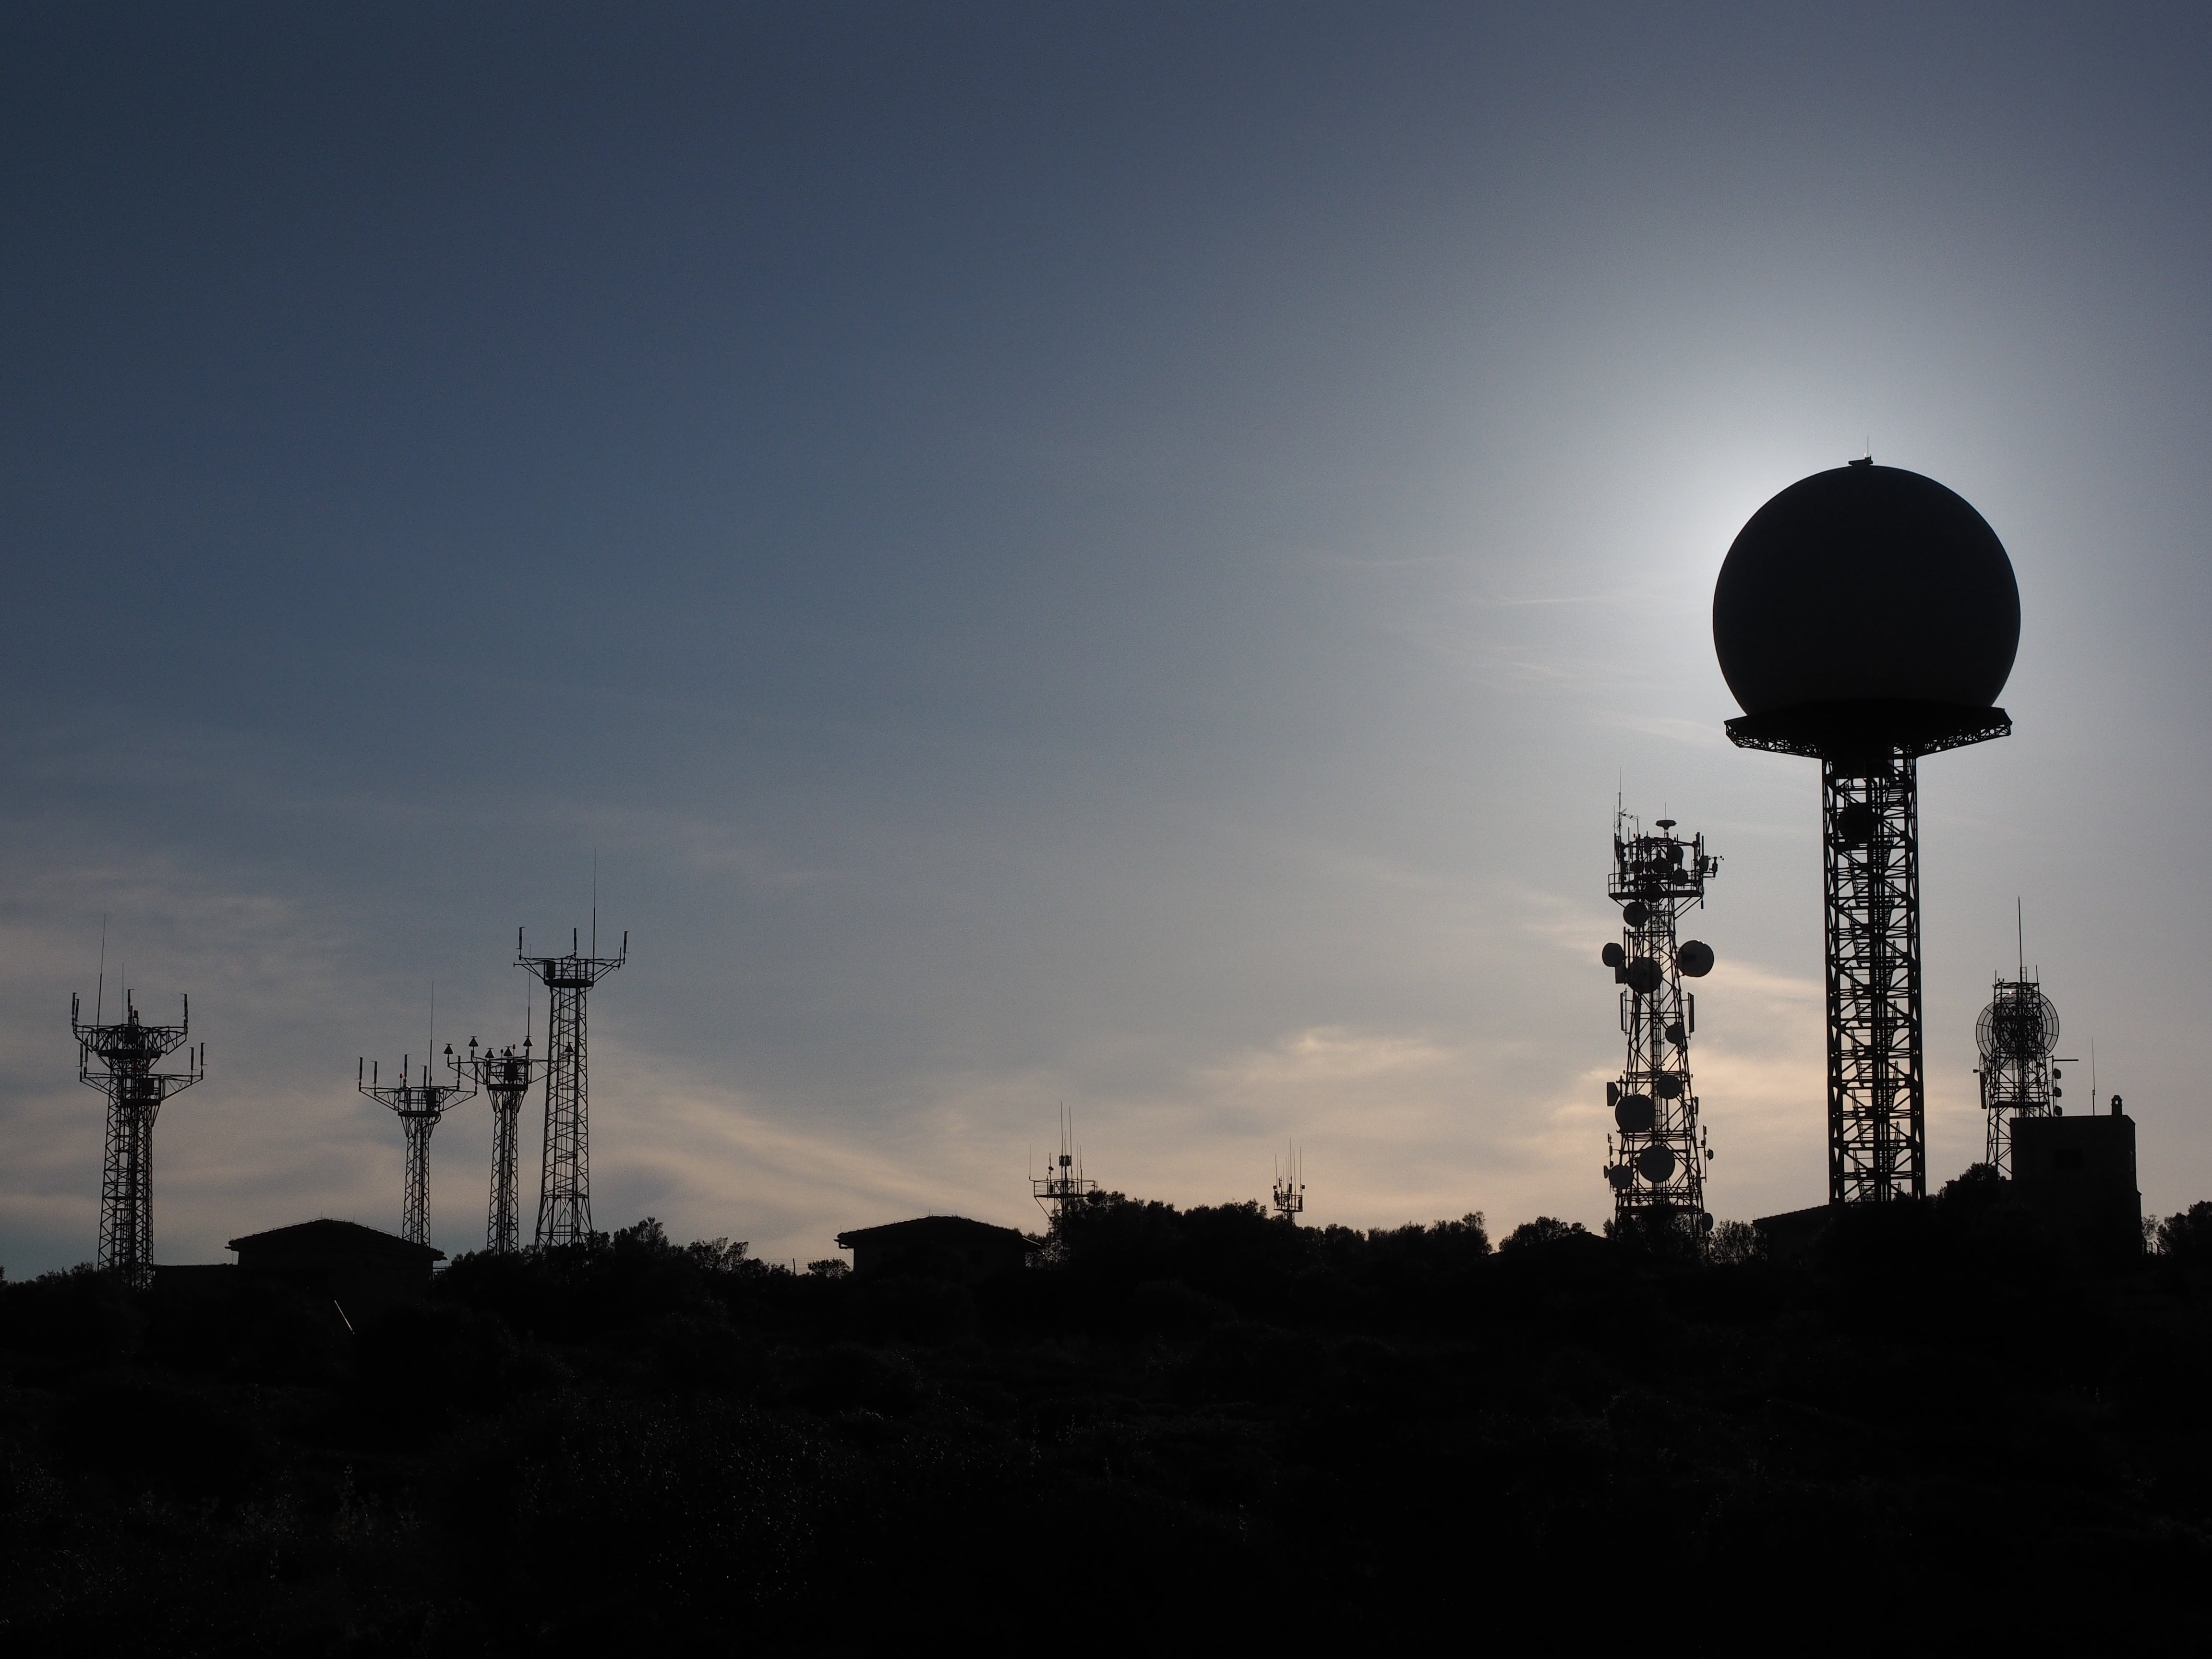 silhouette of tower at daytime, antennas, radar equipment, balloon-like